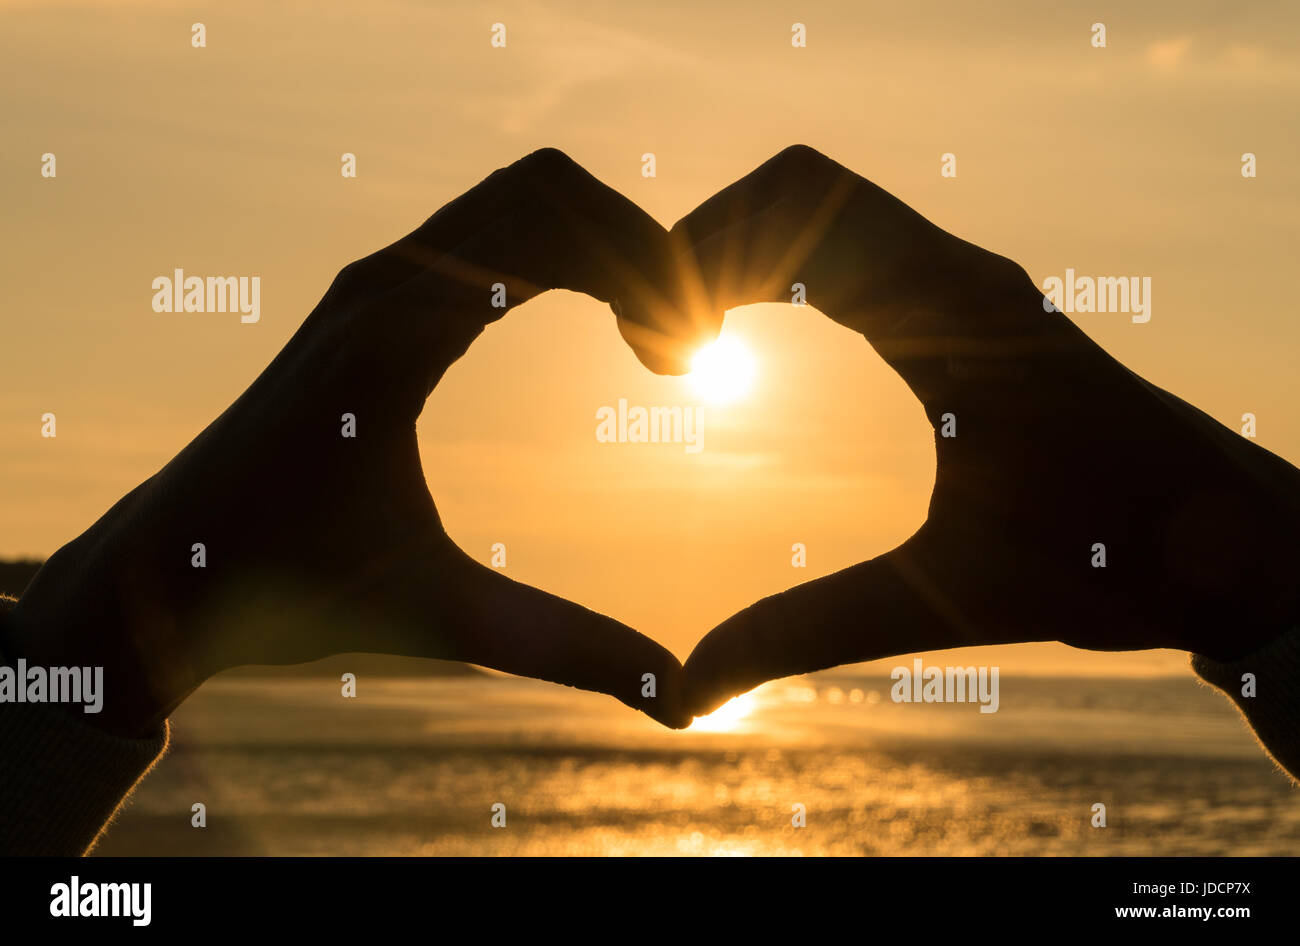 Hand heart frame shape silhouette made against the sun & sky of a sunrise or sunset on a deserted empty beach Stock Photo